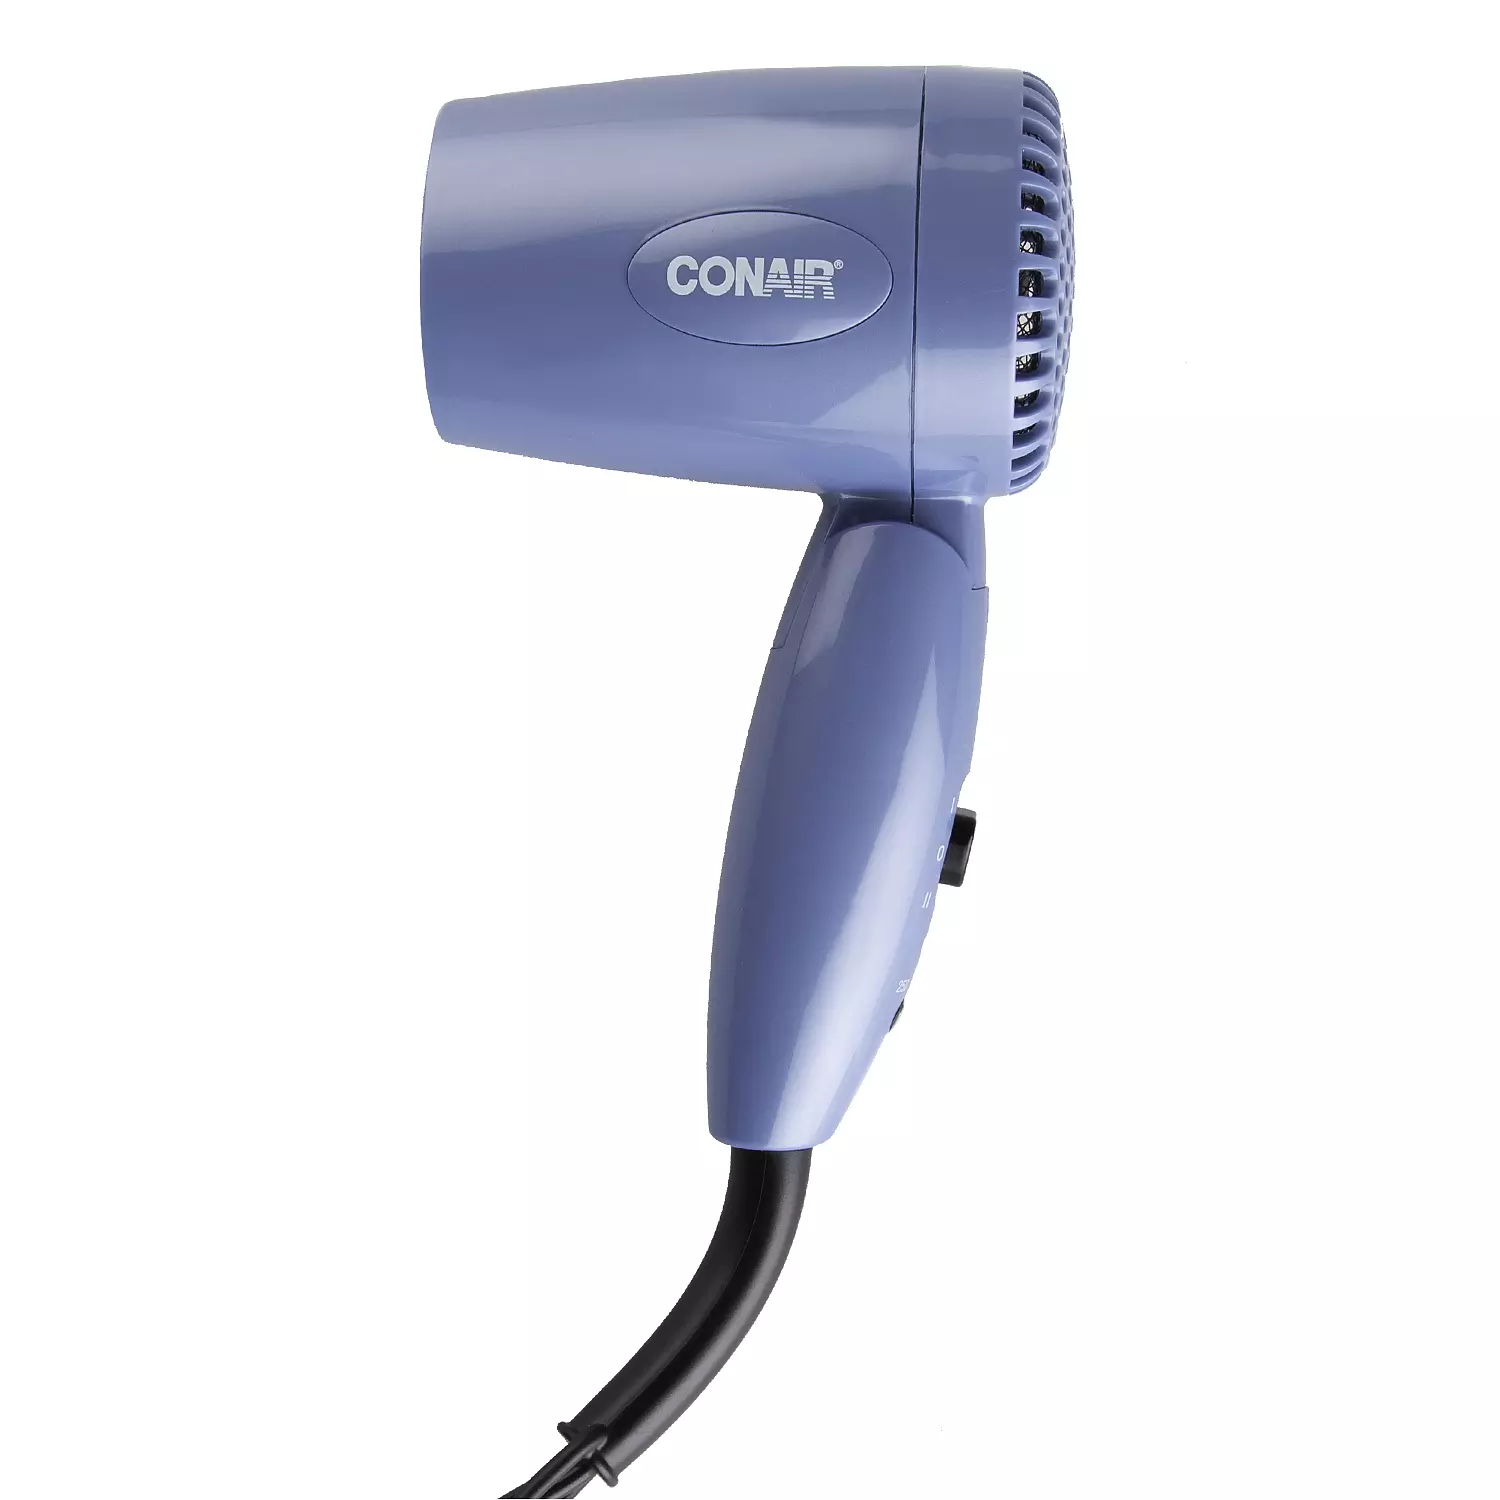 Conair - Hair dryer, travel size